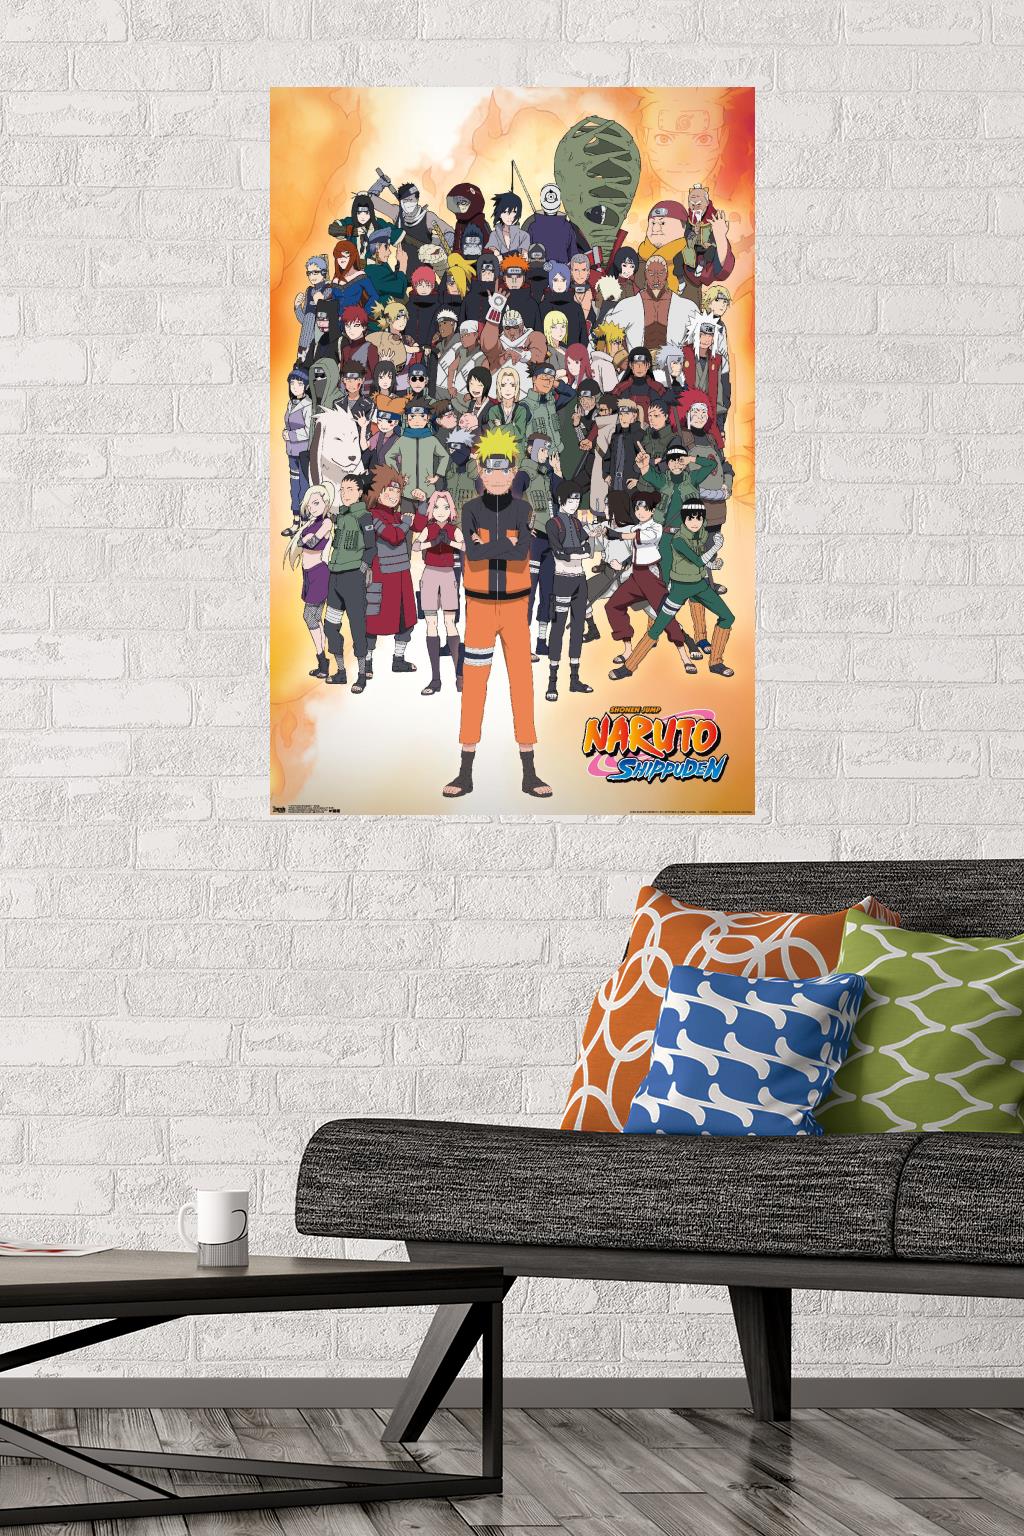 Naruto Shippuden - Group Wall Poster, 22.375" x 34" - image 2 of 4